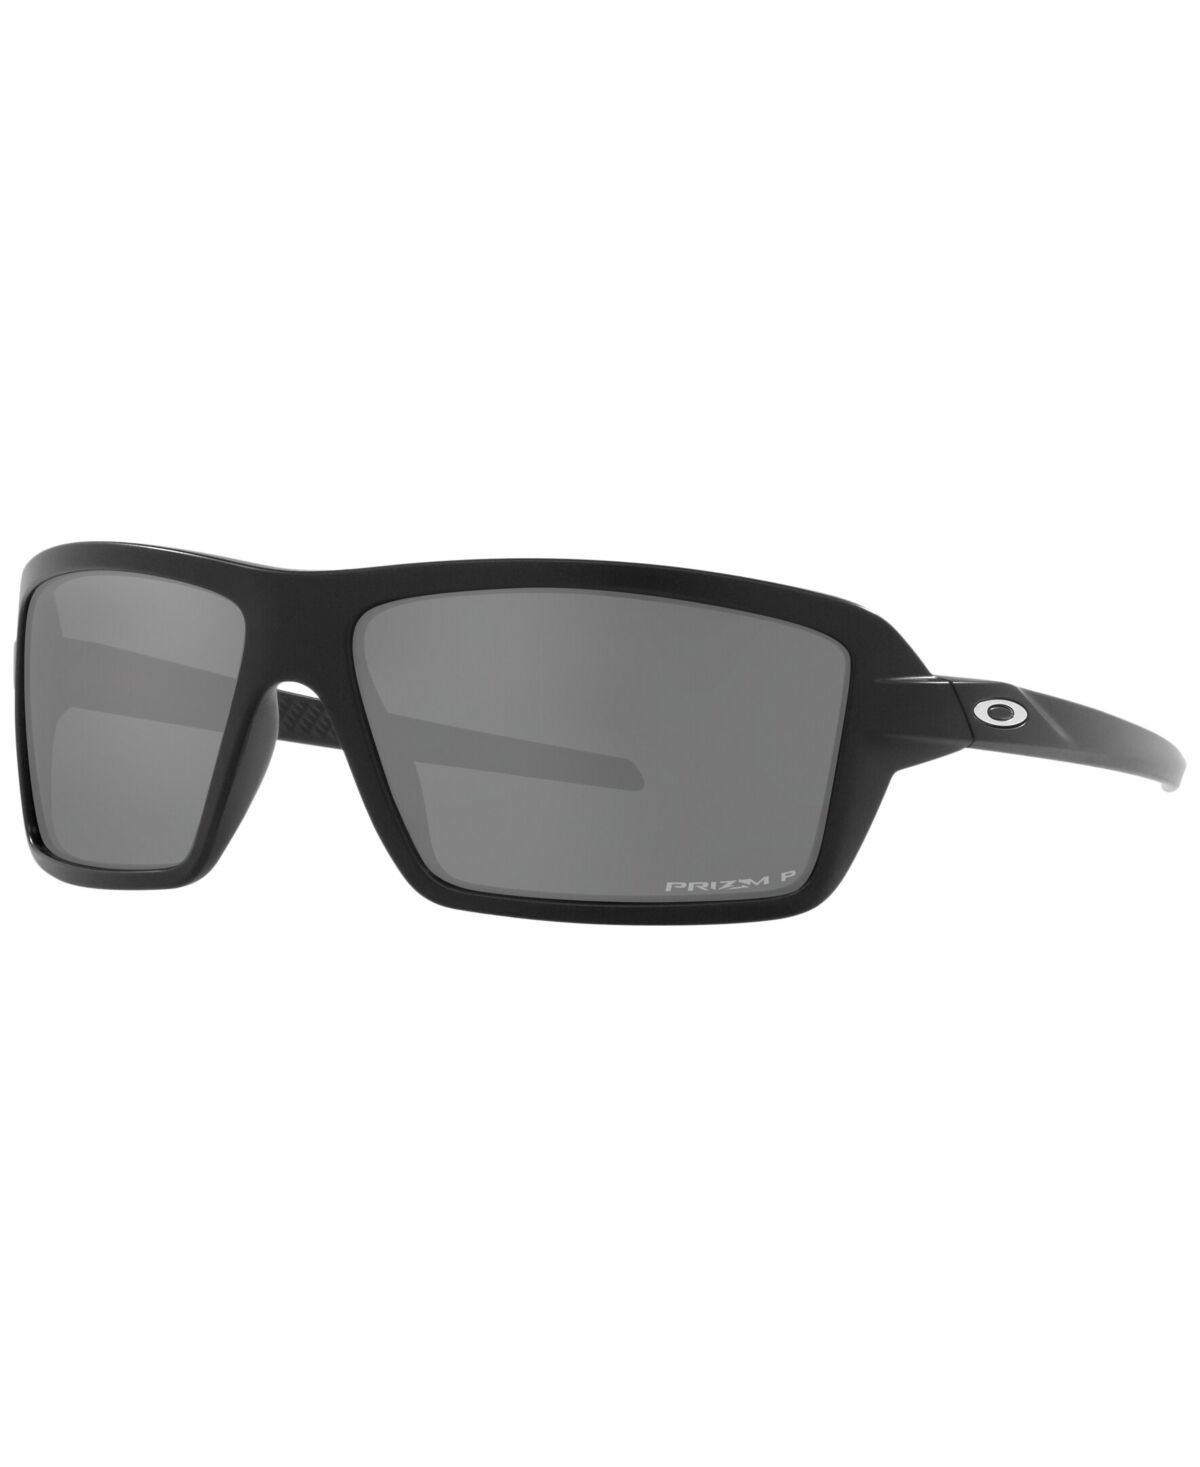 Oakley Men's Polarized Sunglasses, OO9129 Cables 63 - Matte Black